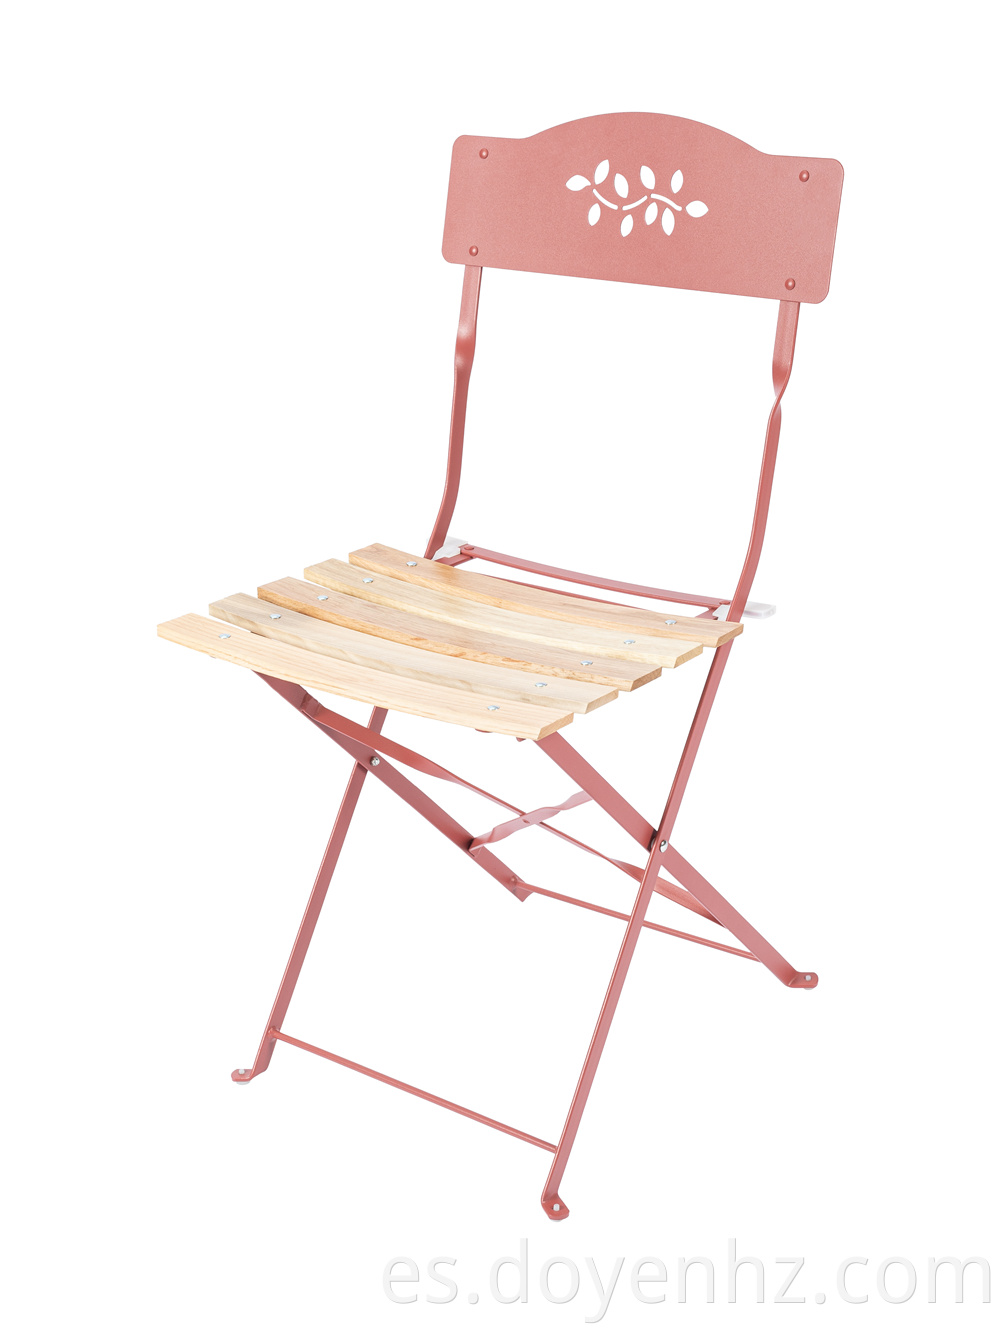 Metal Folding Chair with Wood Slat Seat